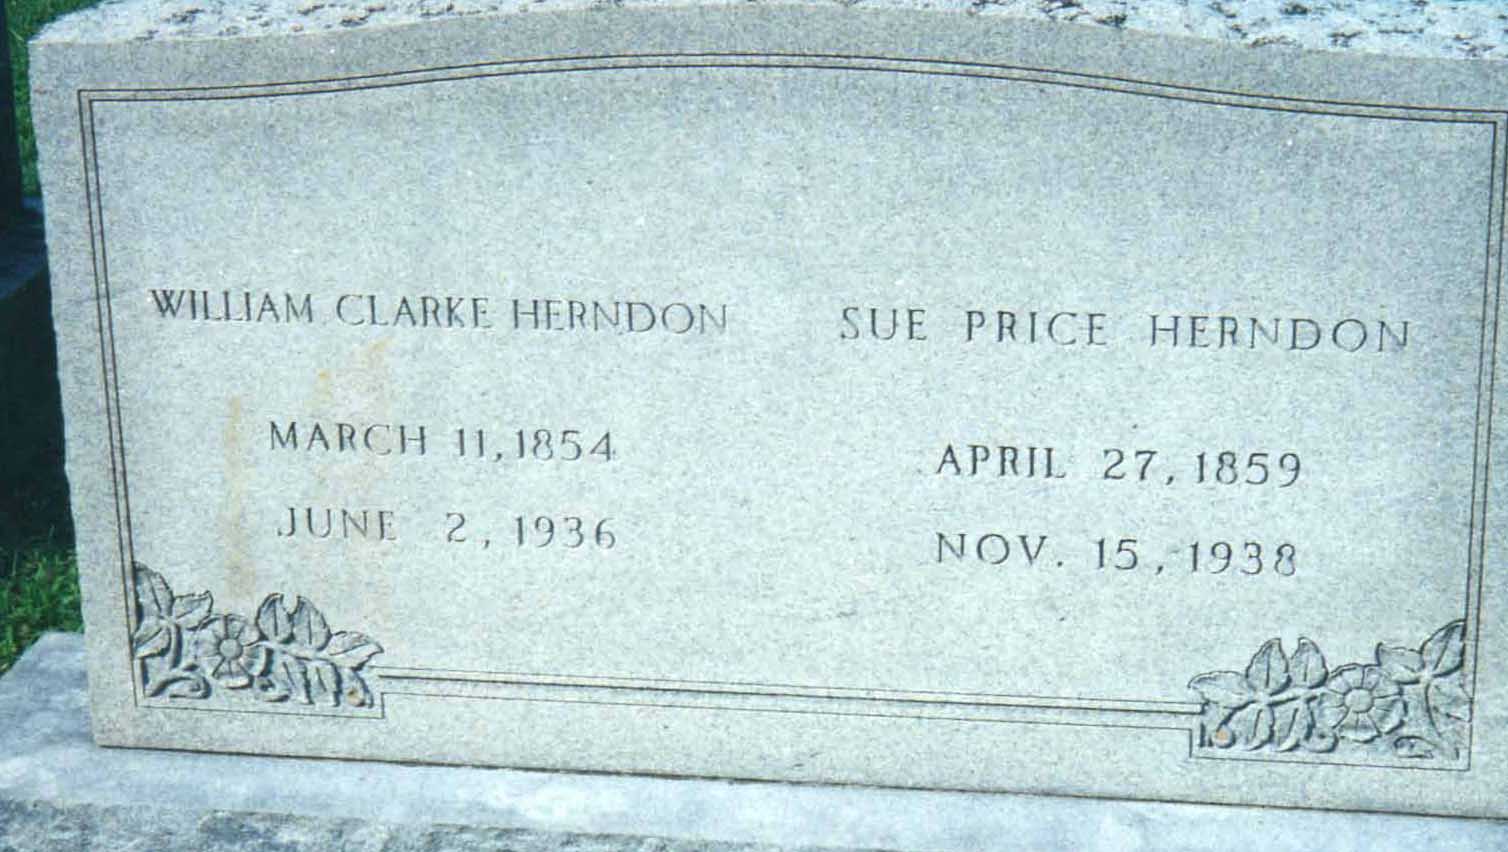 William & Sue Herndon Headstone; Frankfort, KY